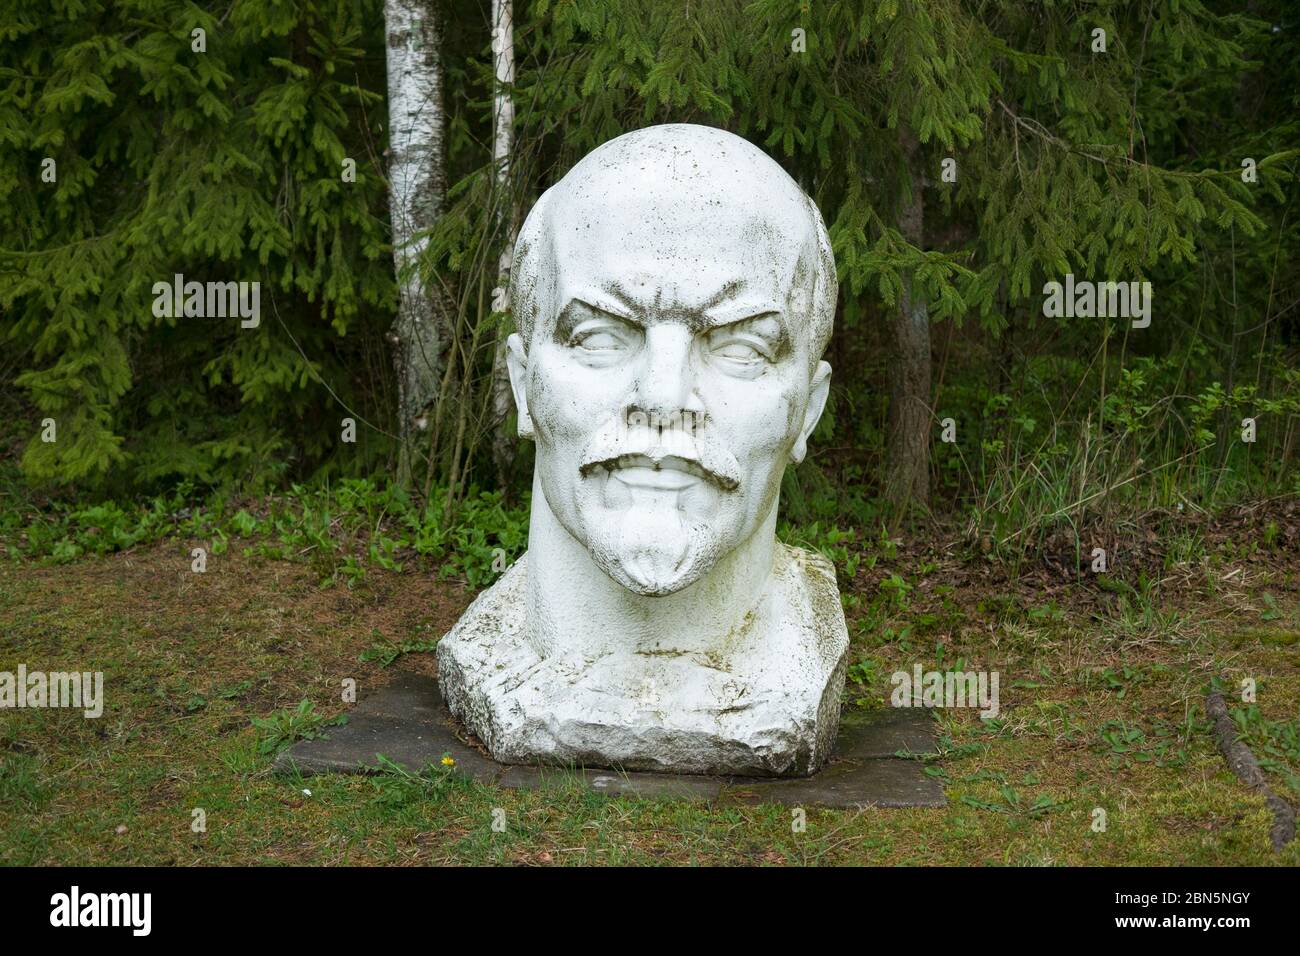 White stone marble bust sculpture of Lenin. At Gruto Parkas near Druskininkai, Lithuania. Stock Photo